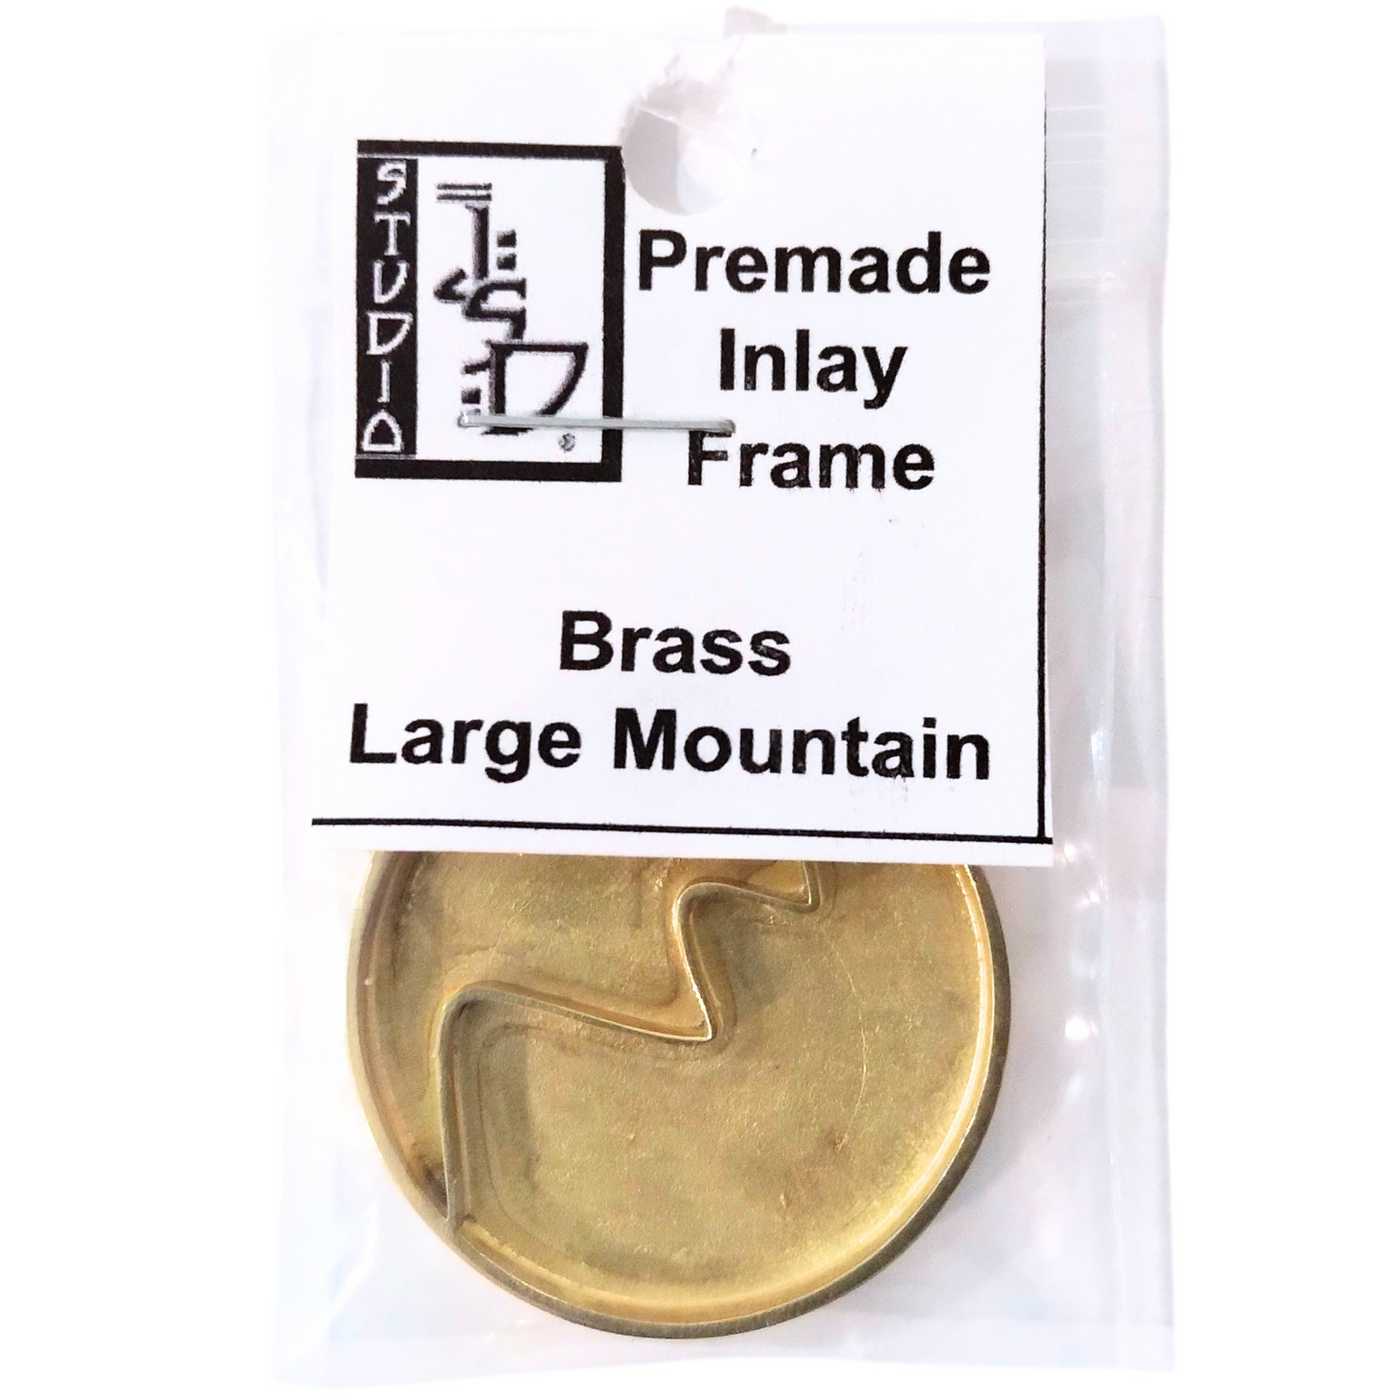 Premade Inlay Frame